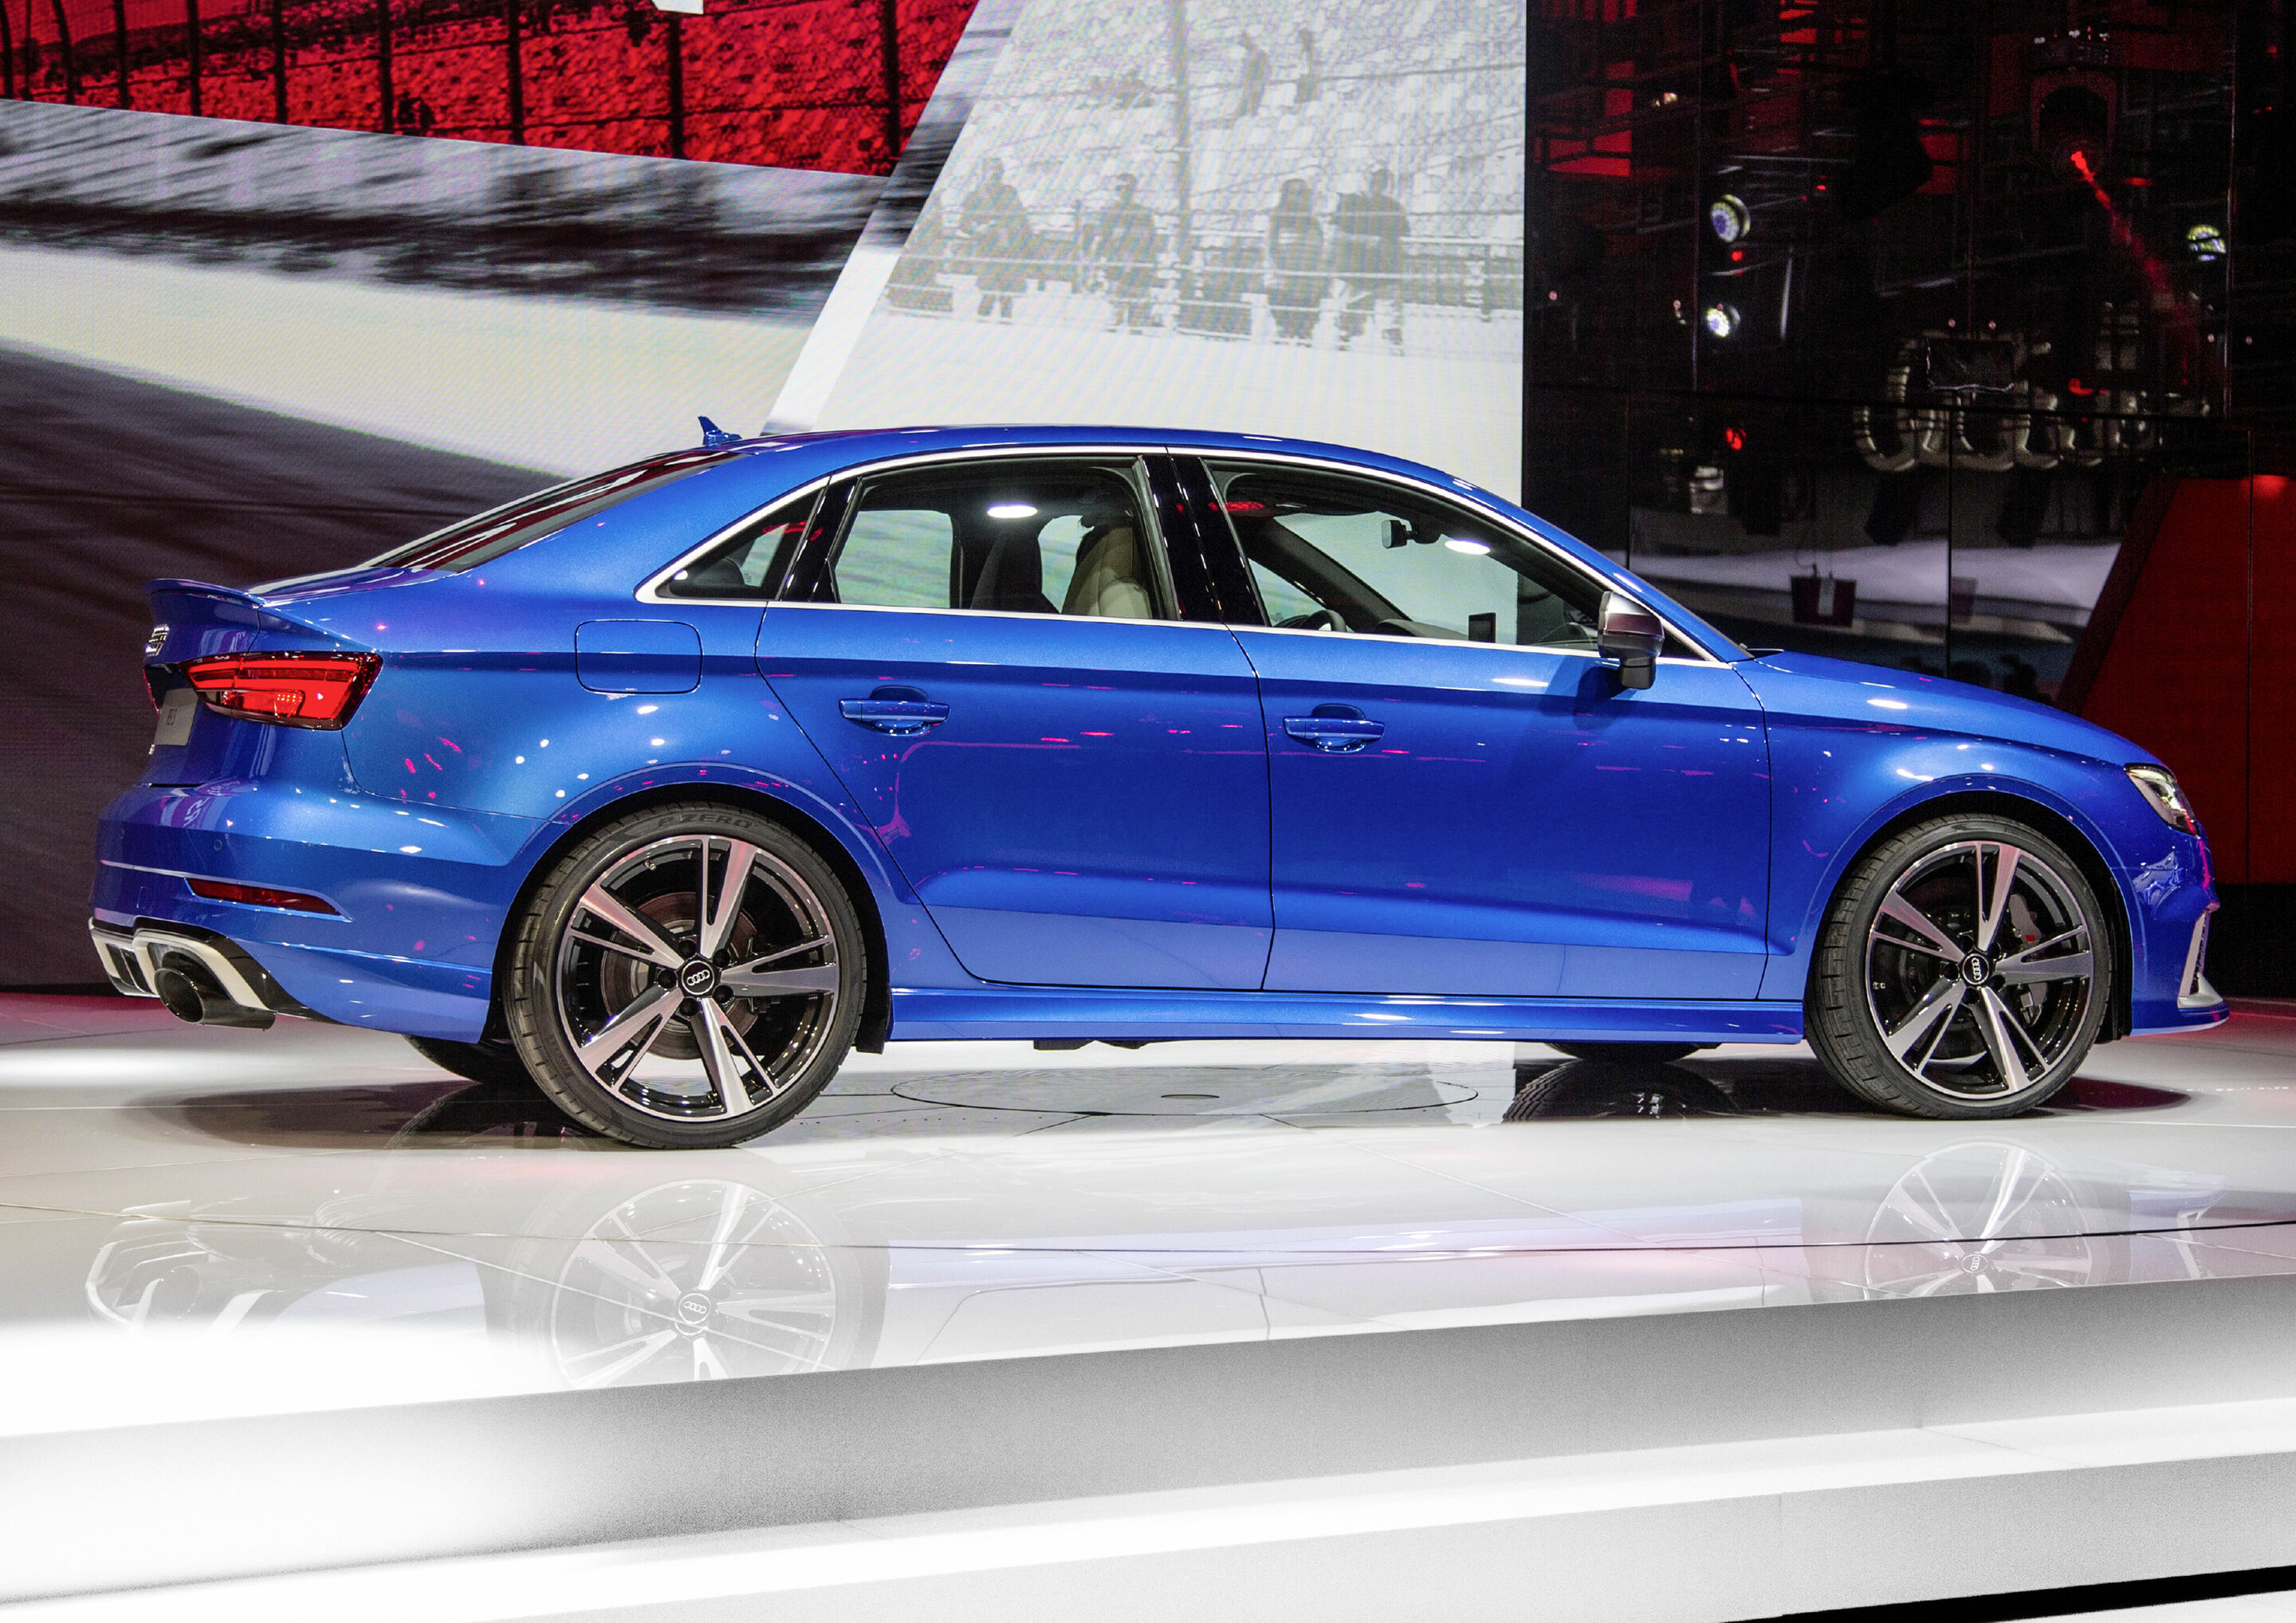 The new Audi RS 3, Paris Motor Show 2016